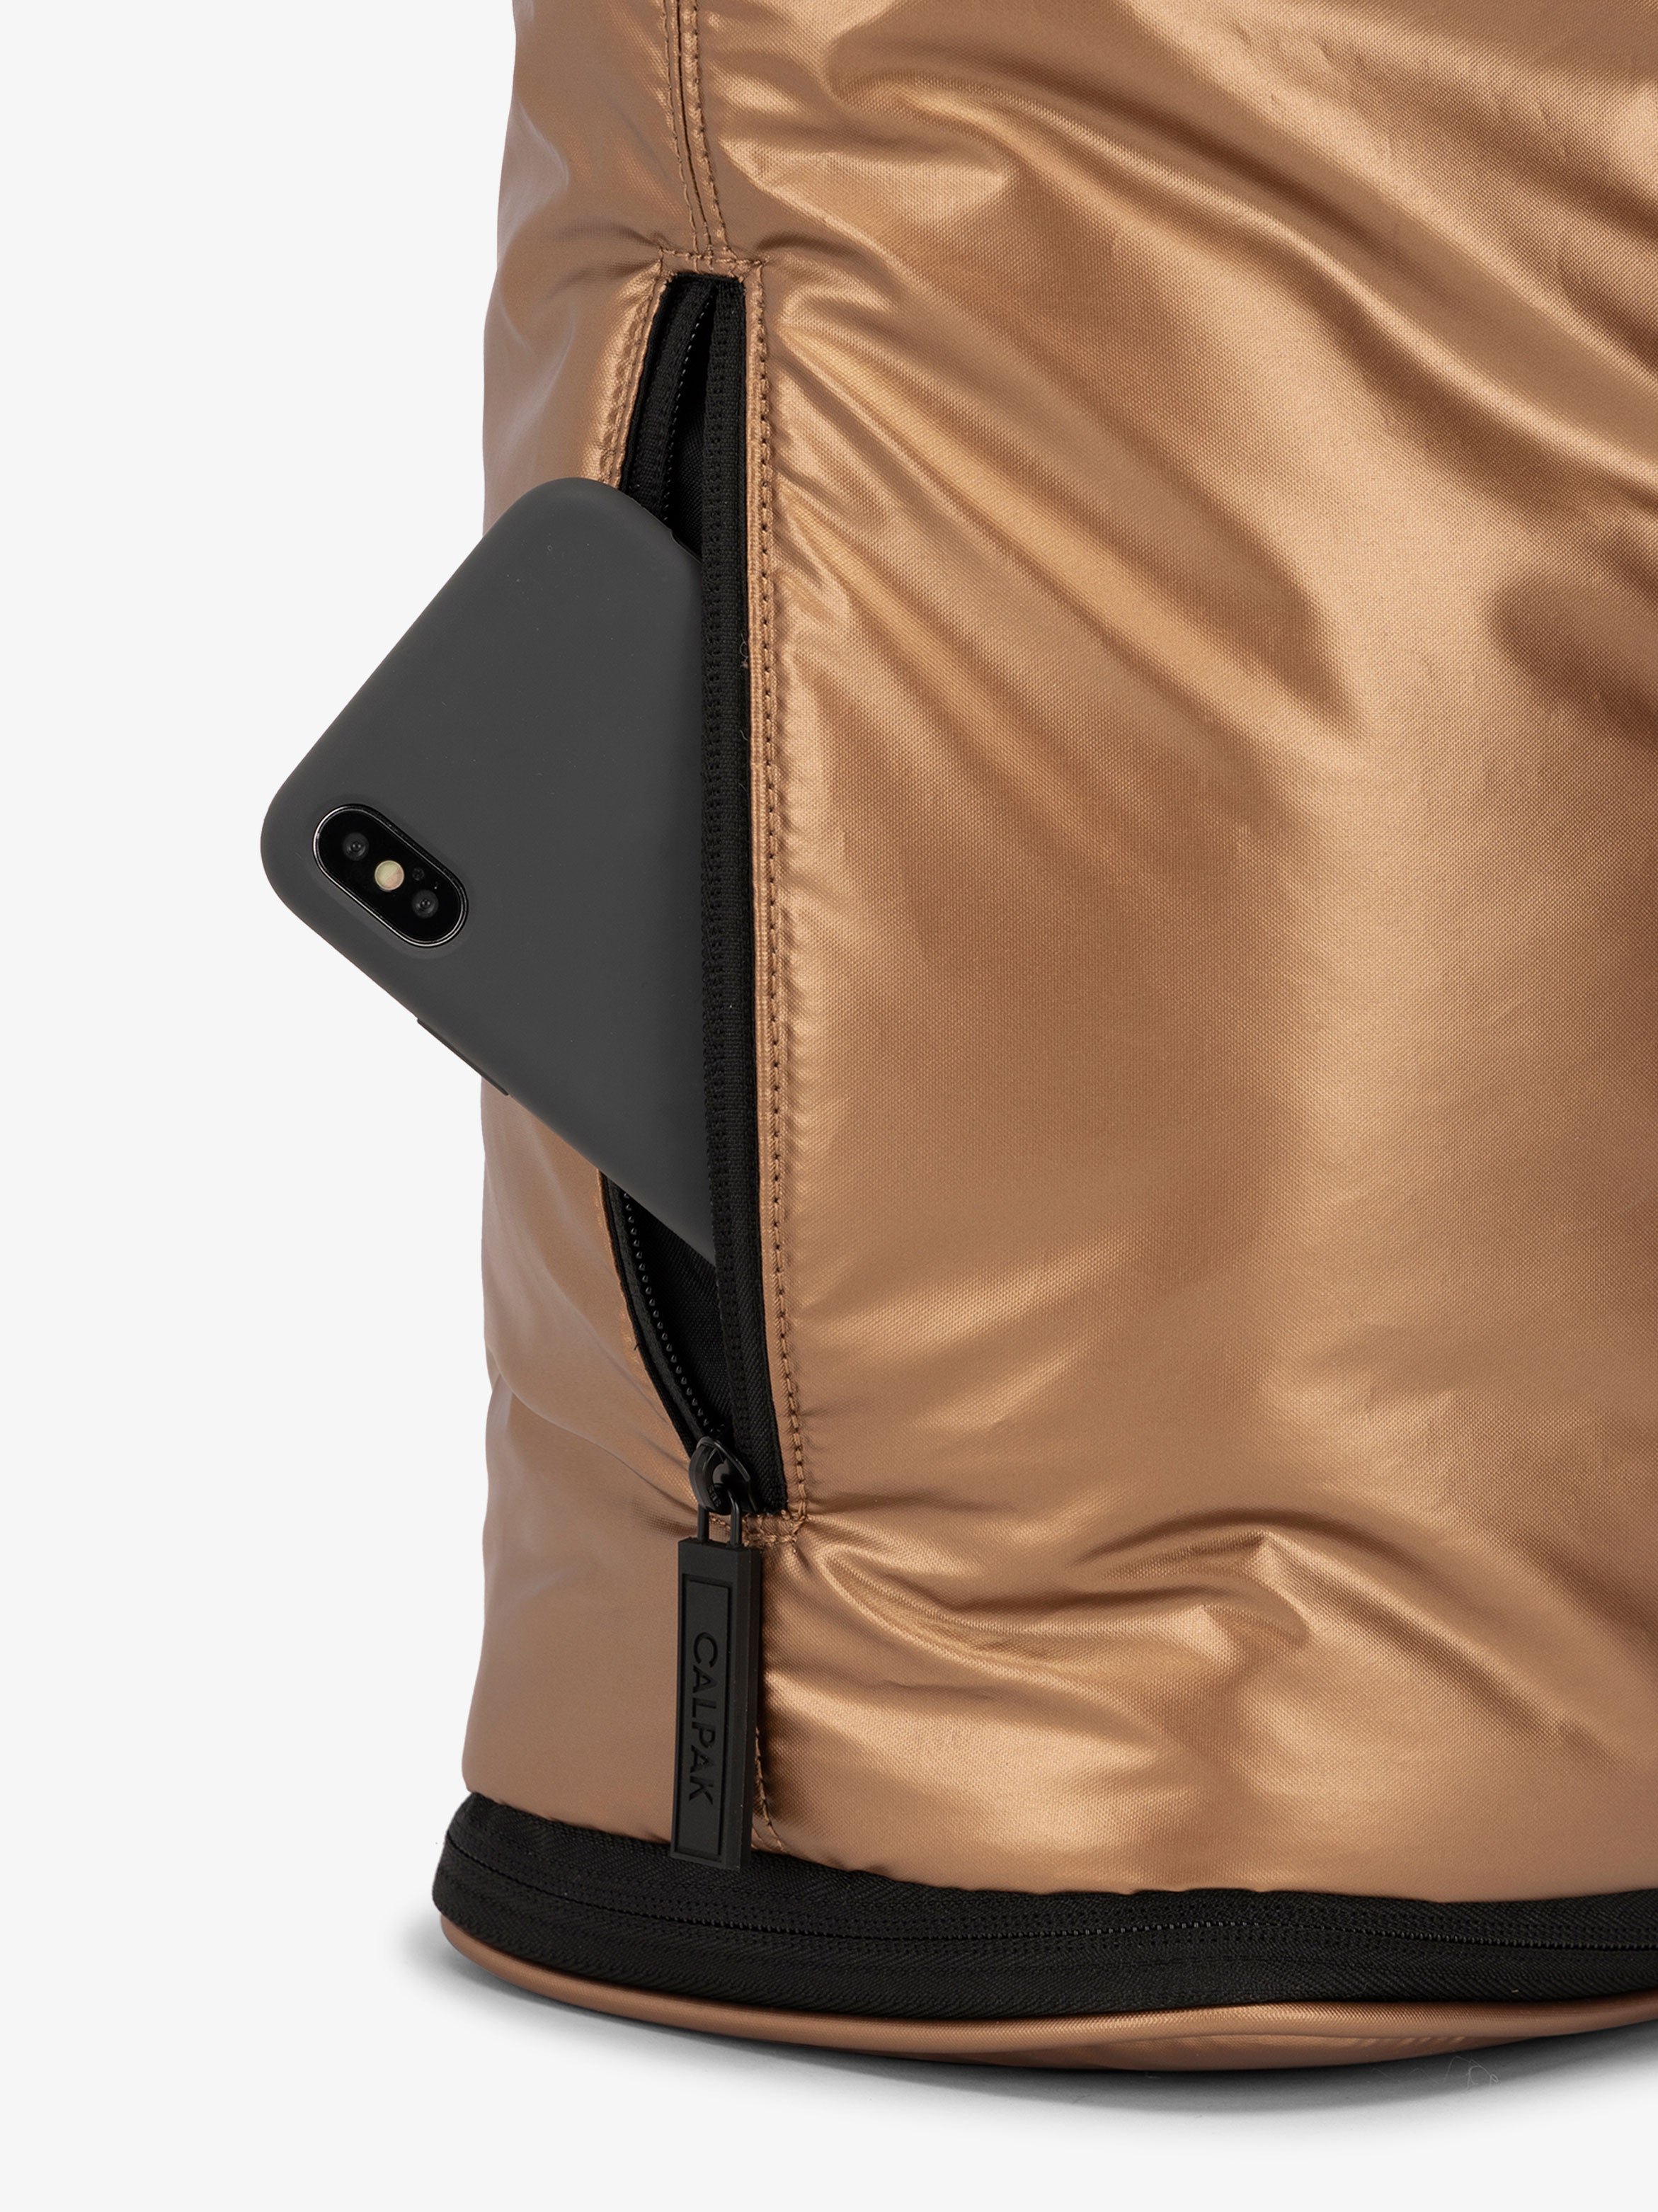 CALPAK Luka expandable laptop bag with hidden zippered pockets in metallic copper